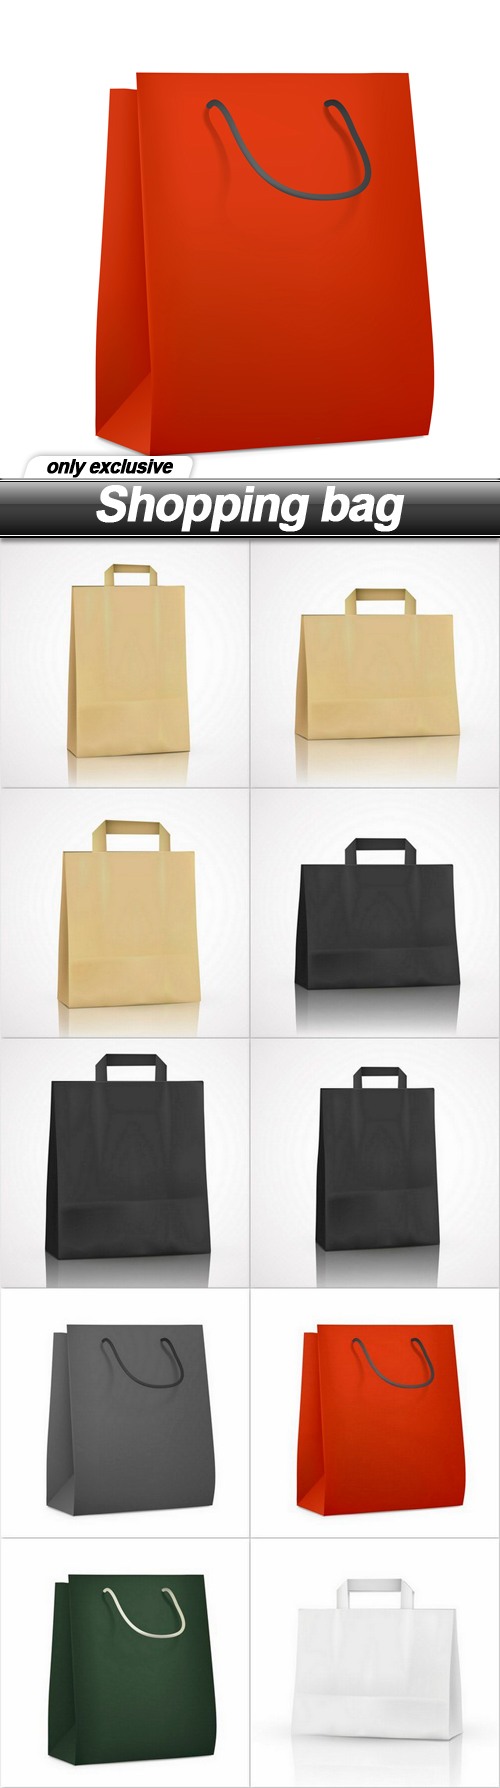 Shopping bag 2 - 10 EPS